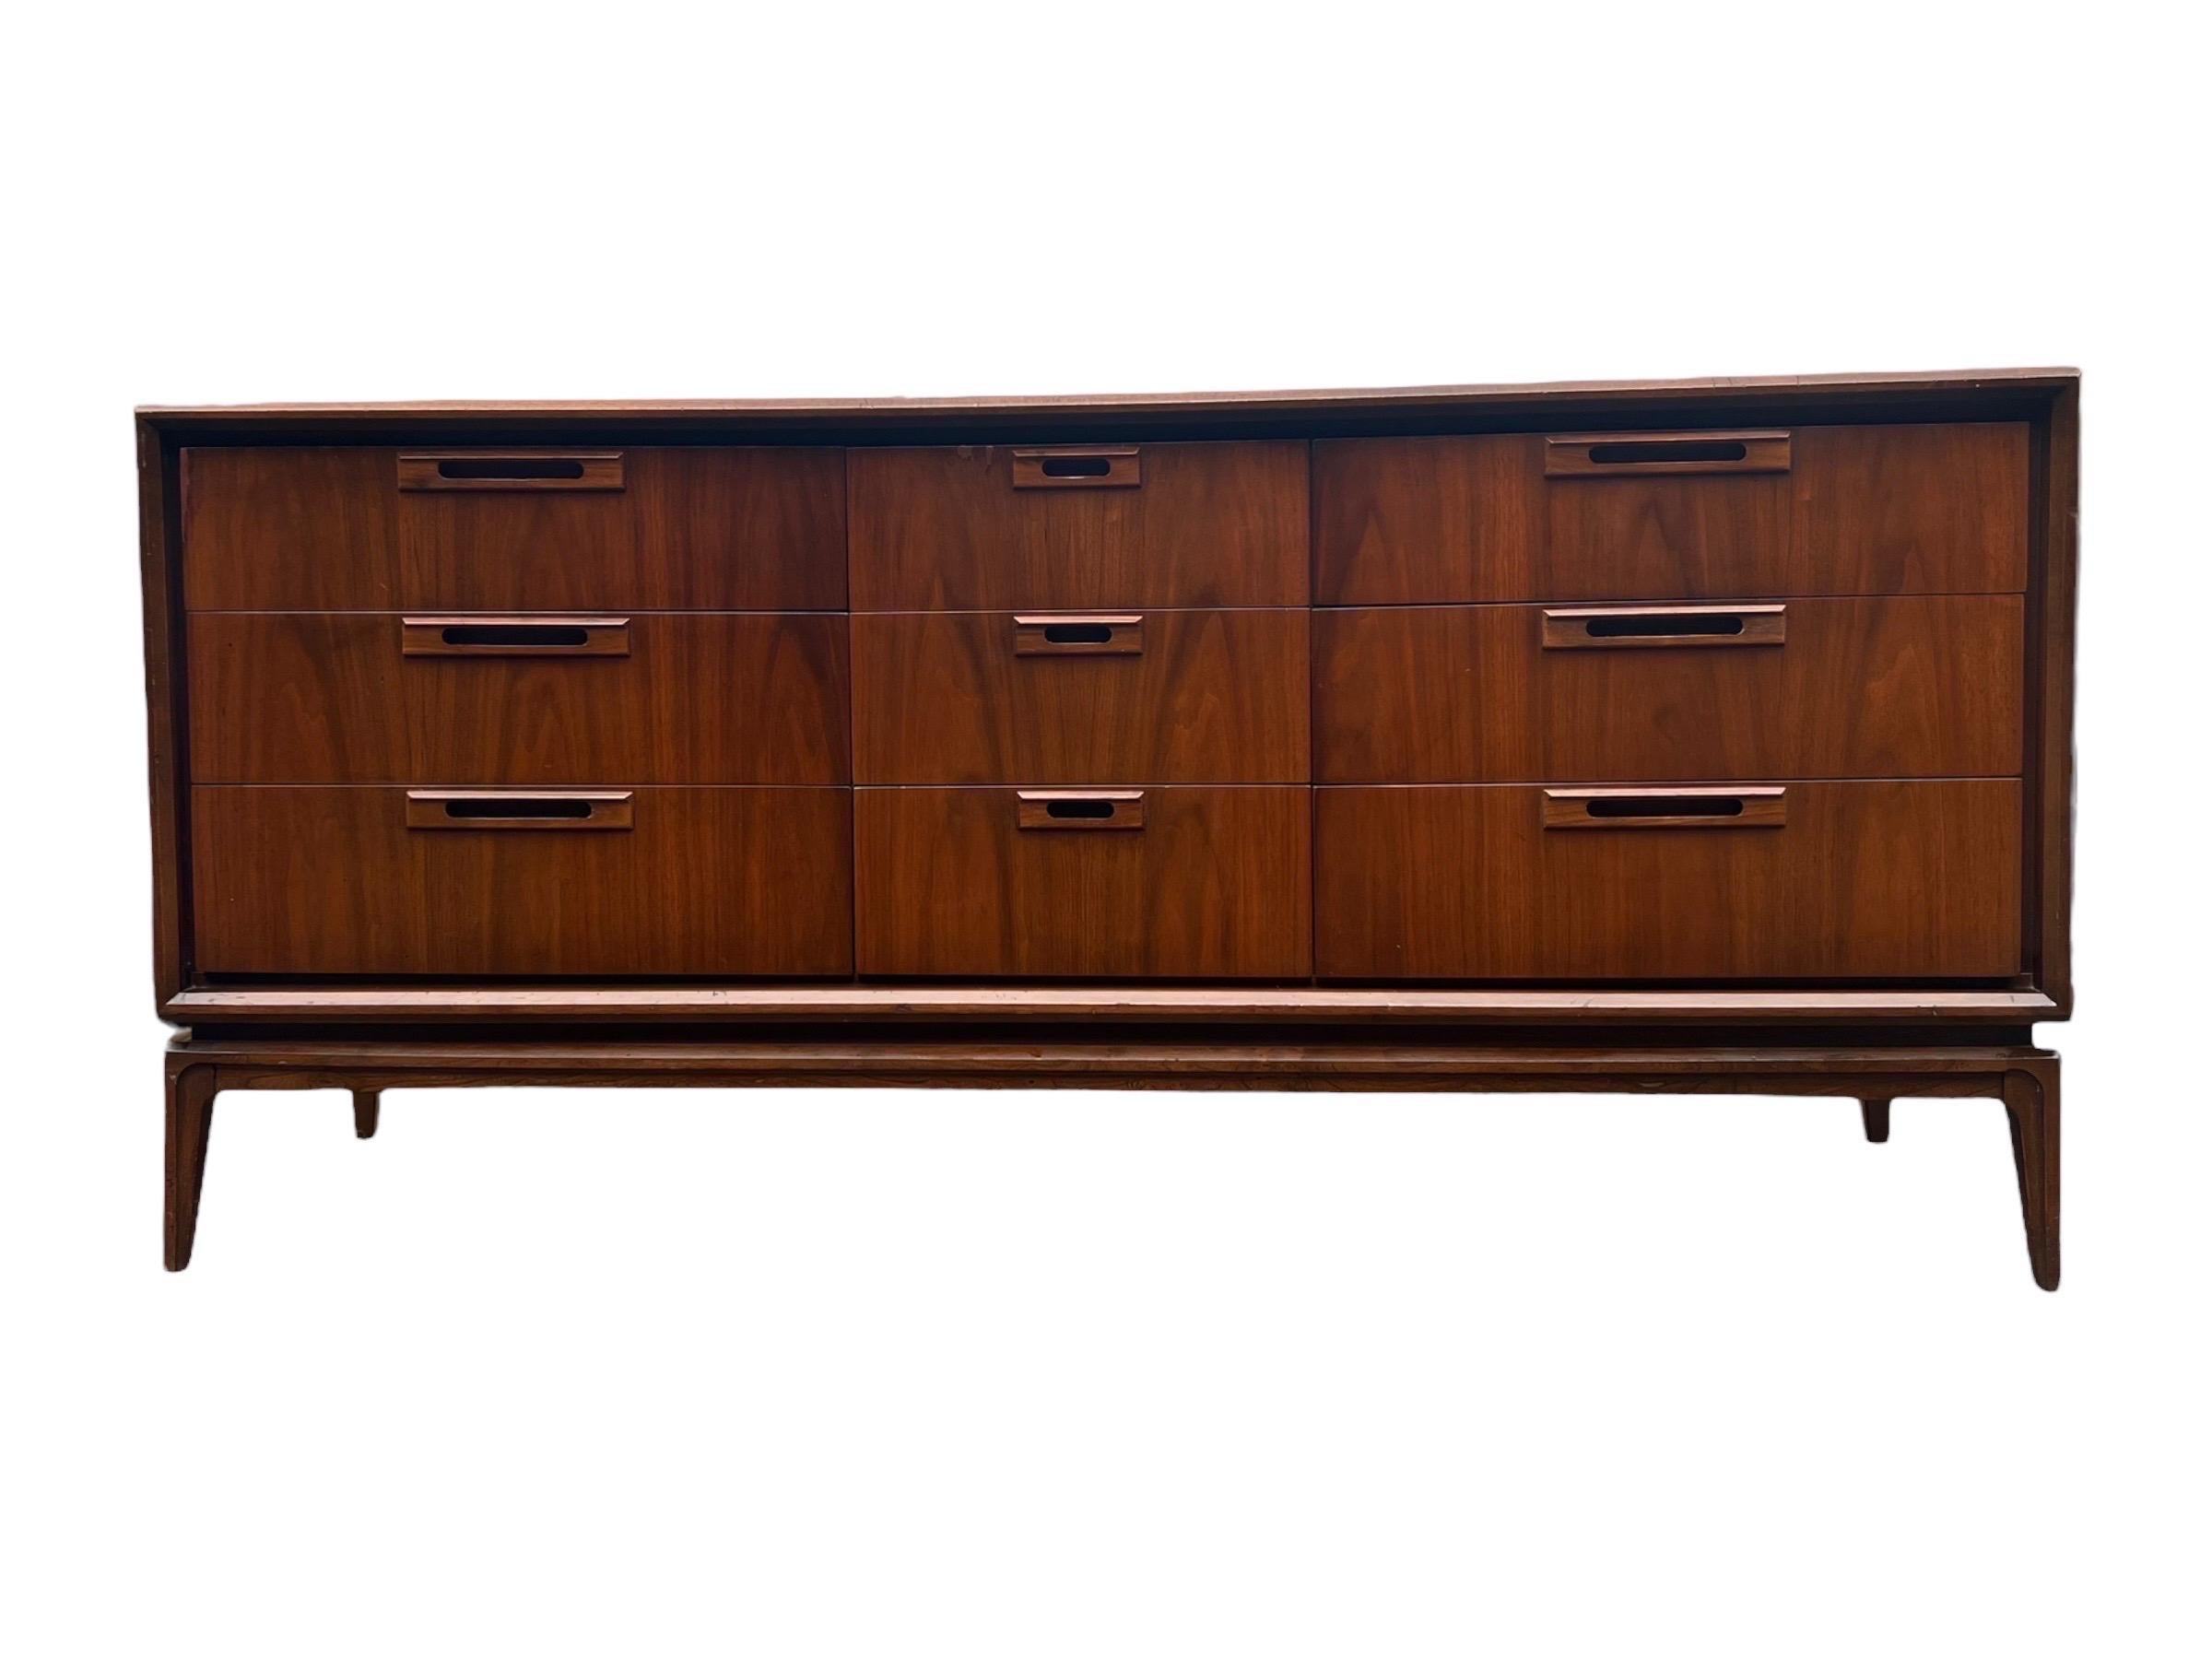 Vintage Mid Century Modern Solid Walnut 9 Drawer Dresser Recessed Pulls by Stanley

Dimensions. 66 W ; 19 D ; 31 H